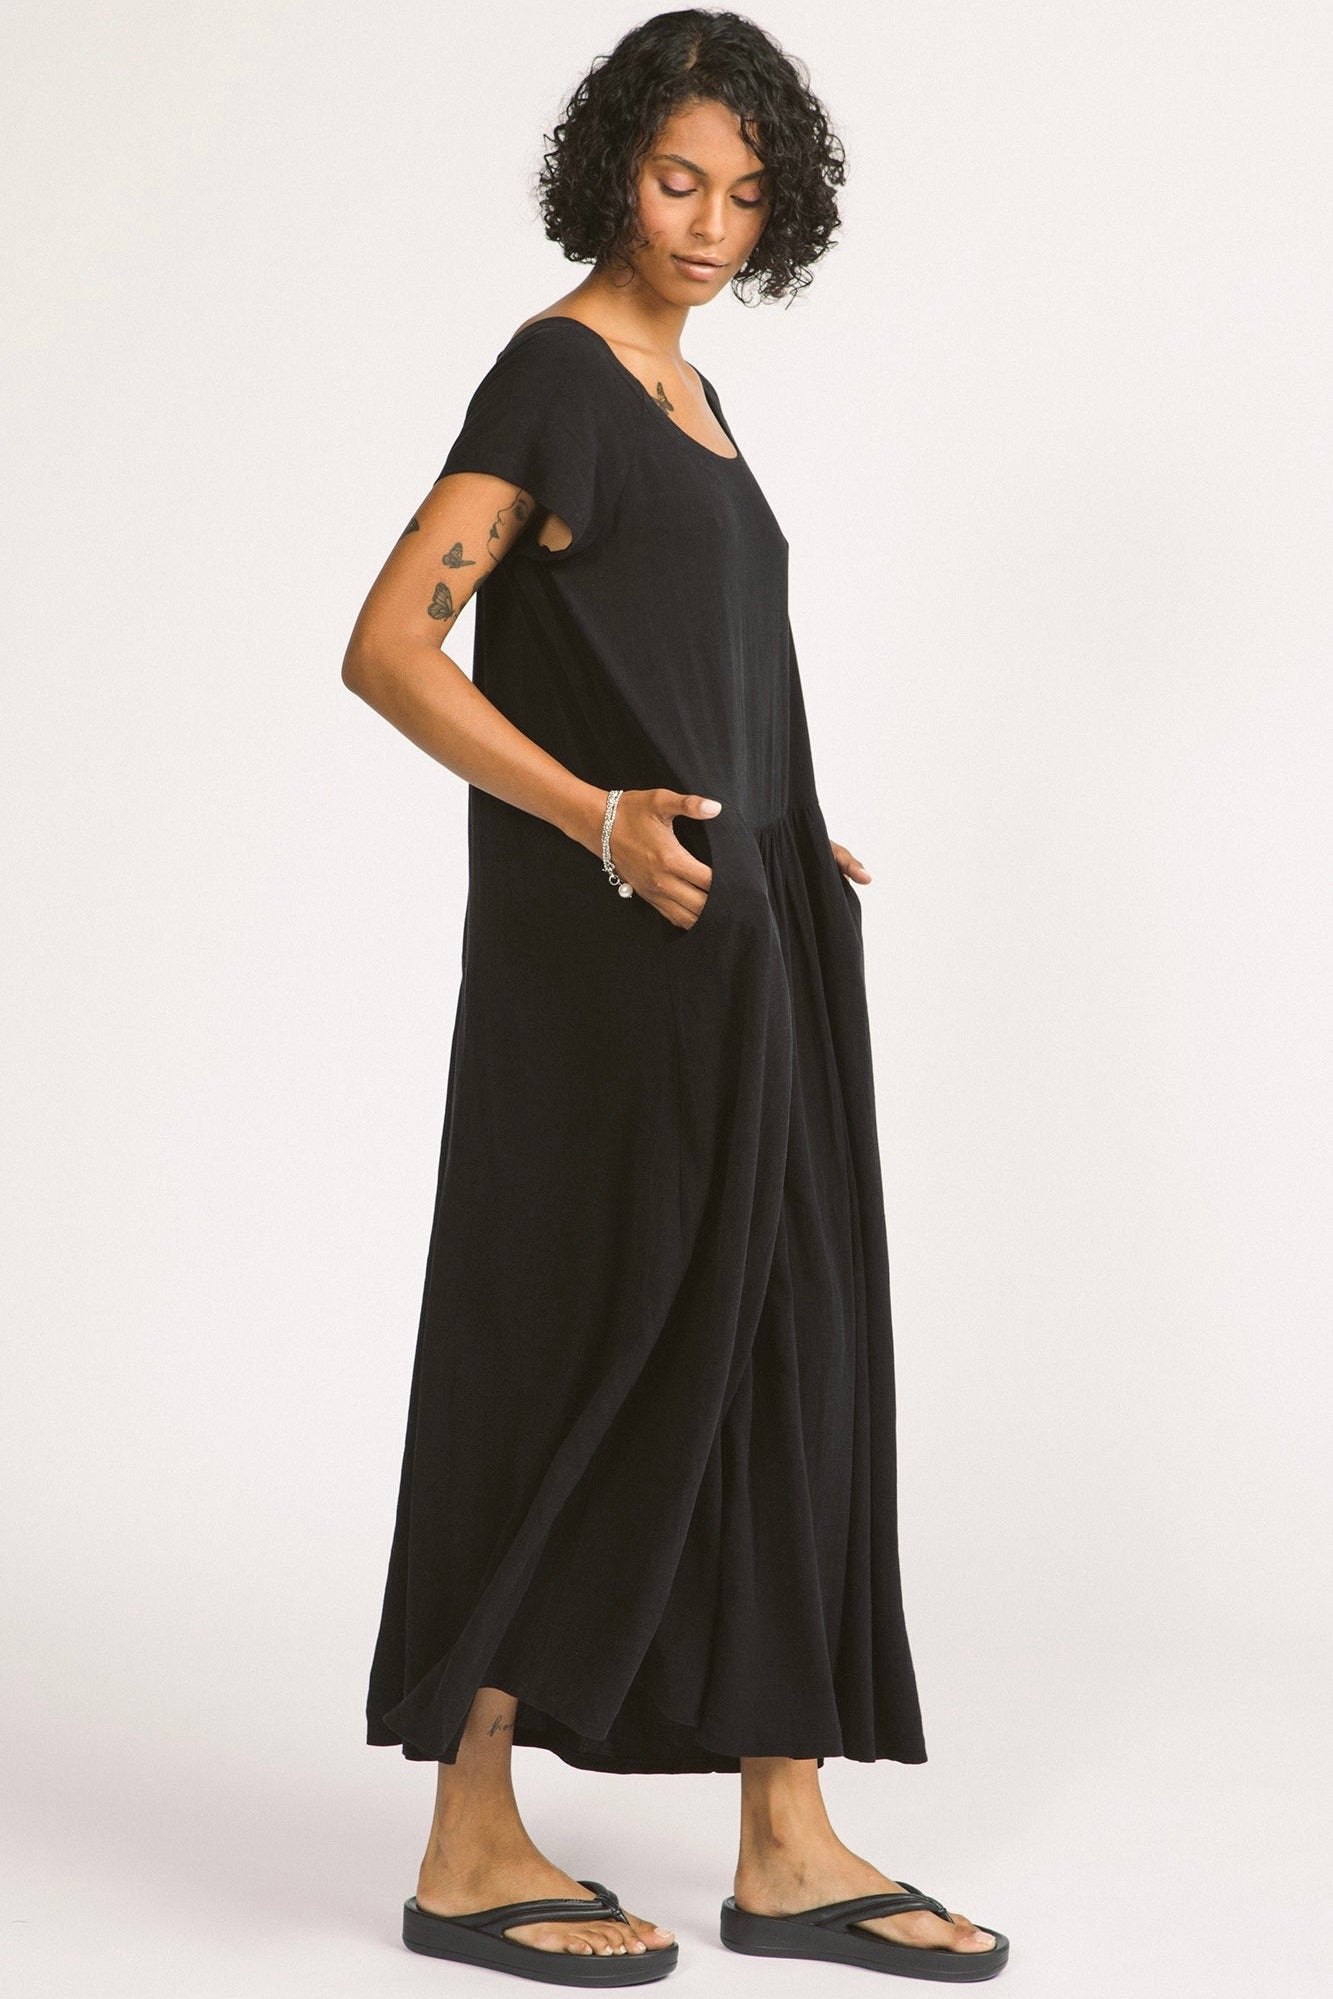 Allison Wonderland: Enola Dress Black